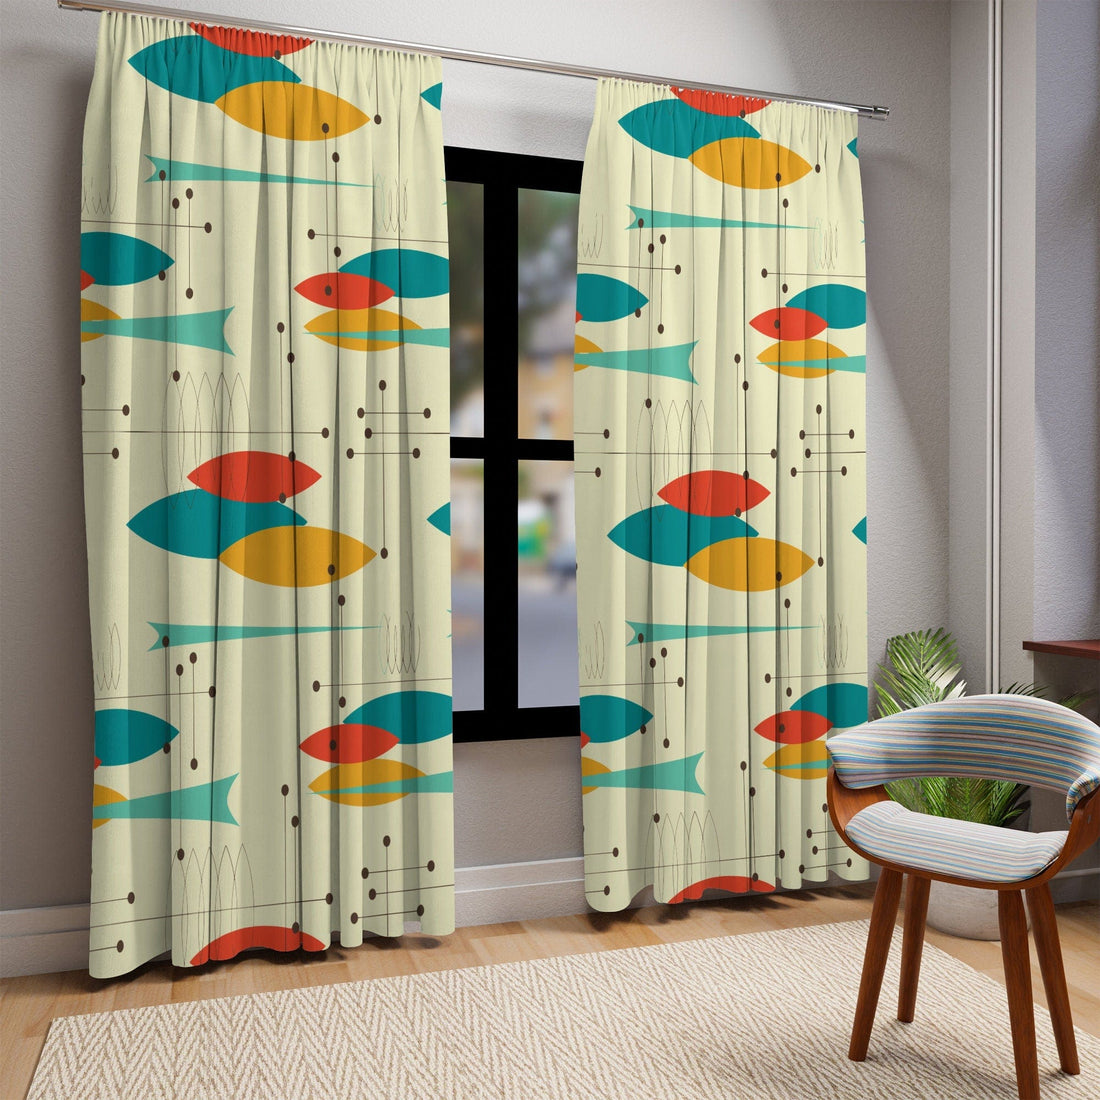 Kate McEnroe New York Mid Century Modern Geometric Pattern Curtains - Retro Atomic Style Starburst Prints in Orange, Aqua, Mustard and TealWindow CurtainsW30S - FIS - CRE - SH6